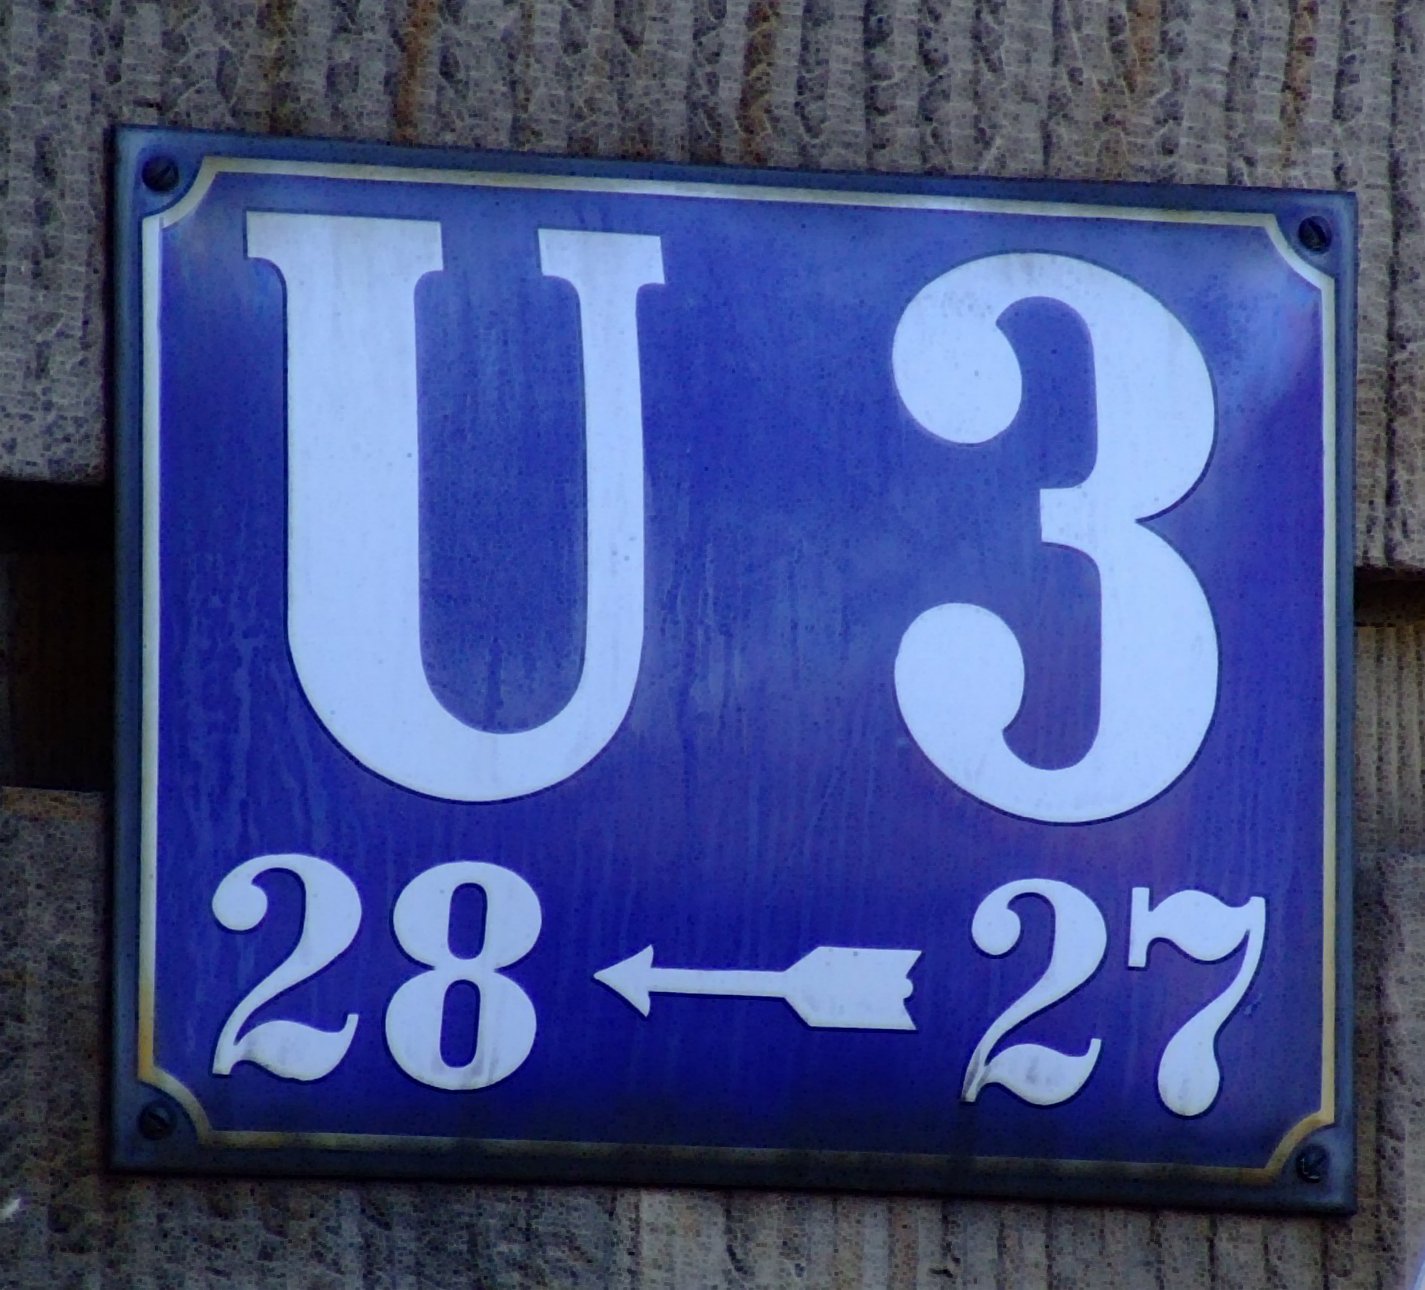 Mannheim U3,27-28 Schild 2.jpg